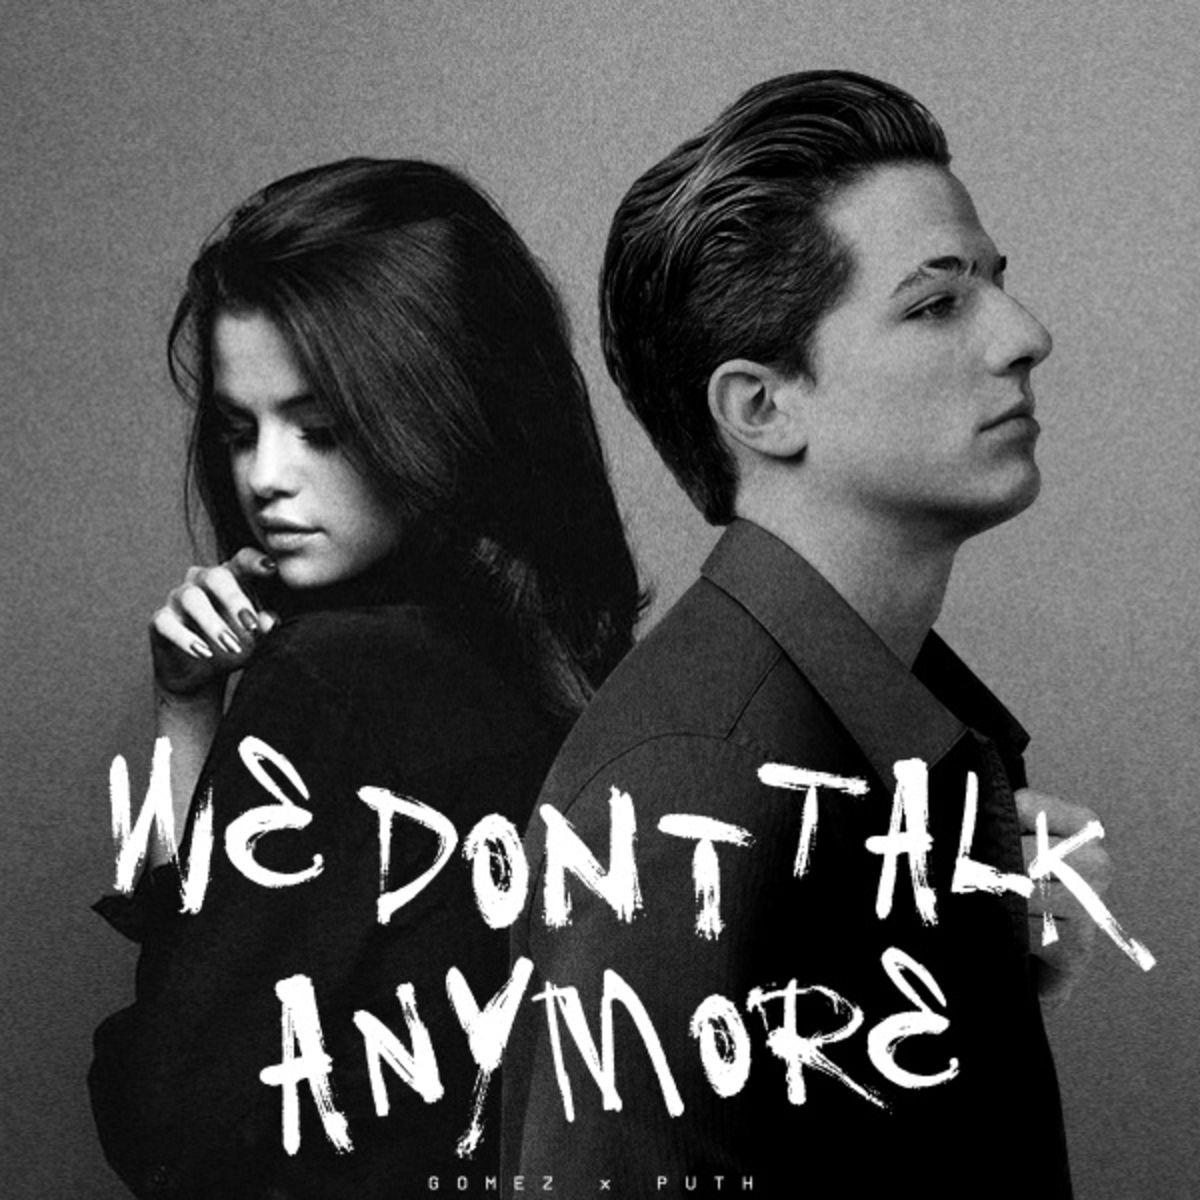 We Don't Talk Anymore. Selena Gomez + Charlie Puth